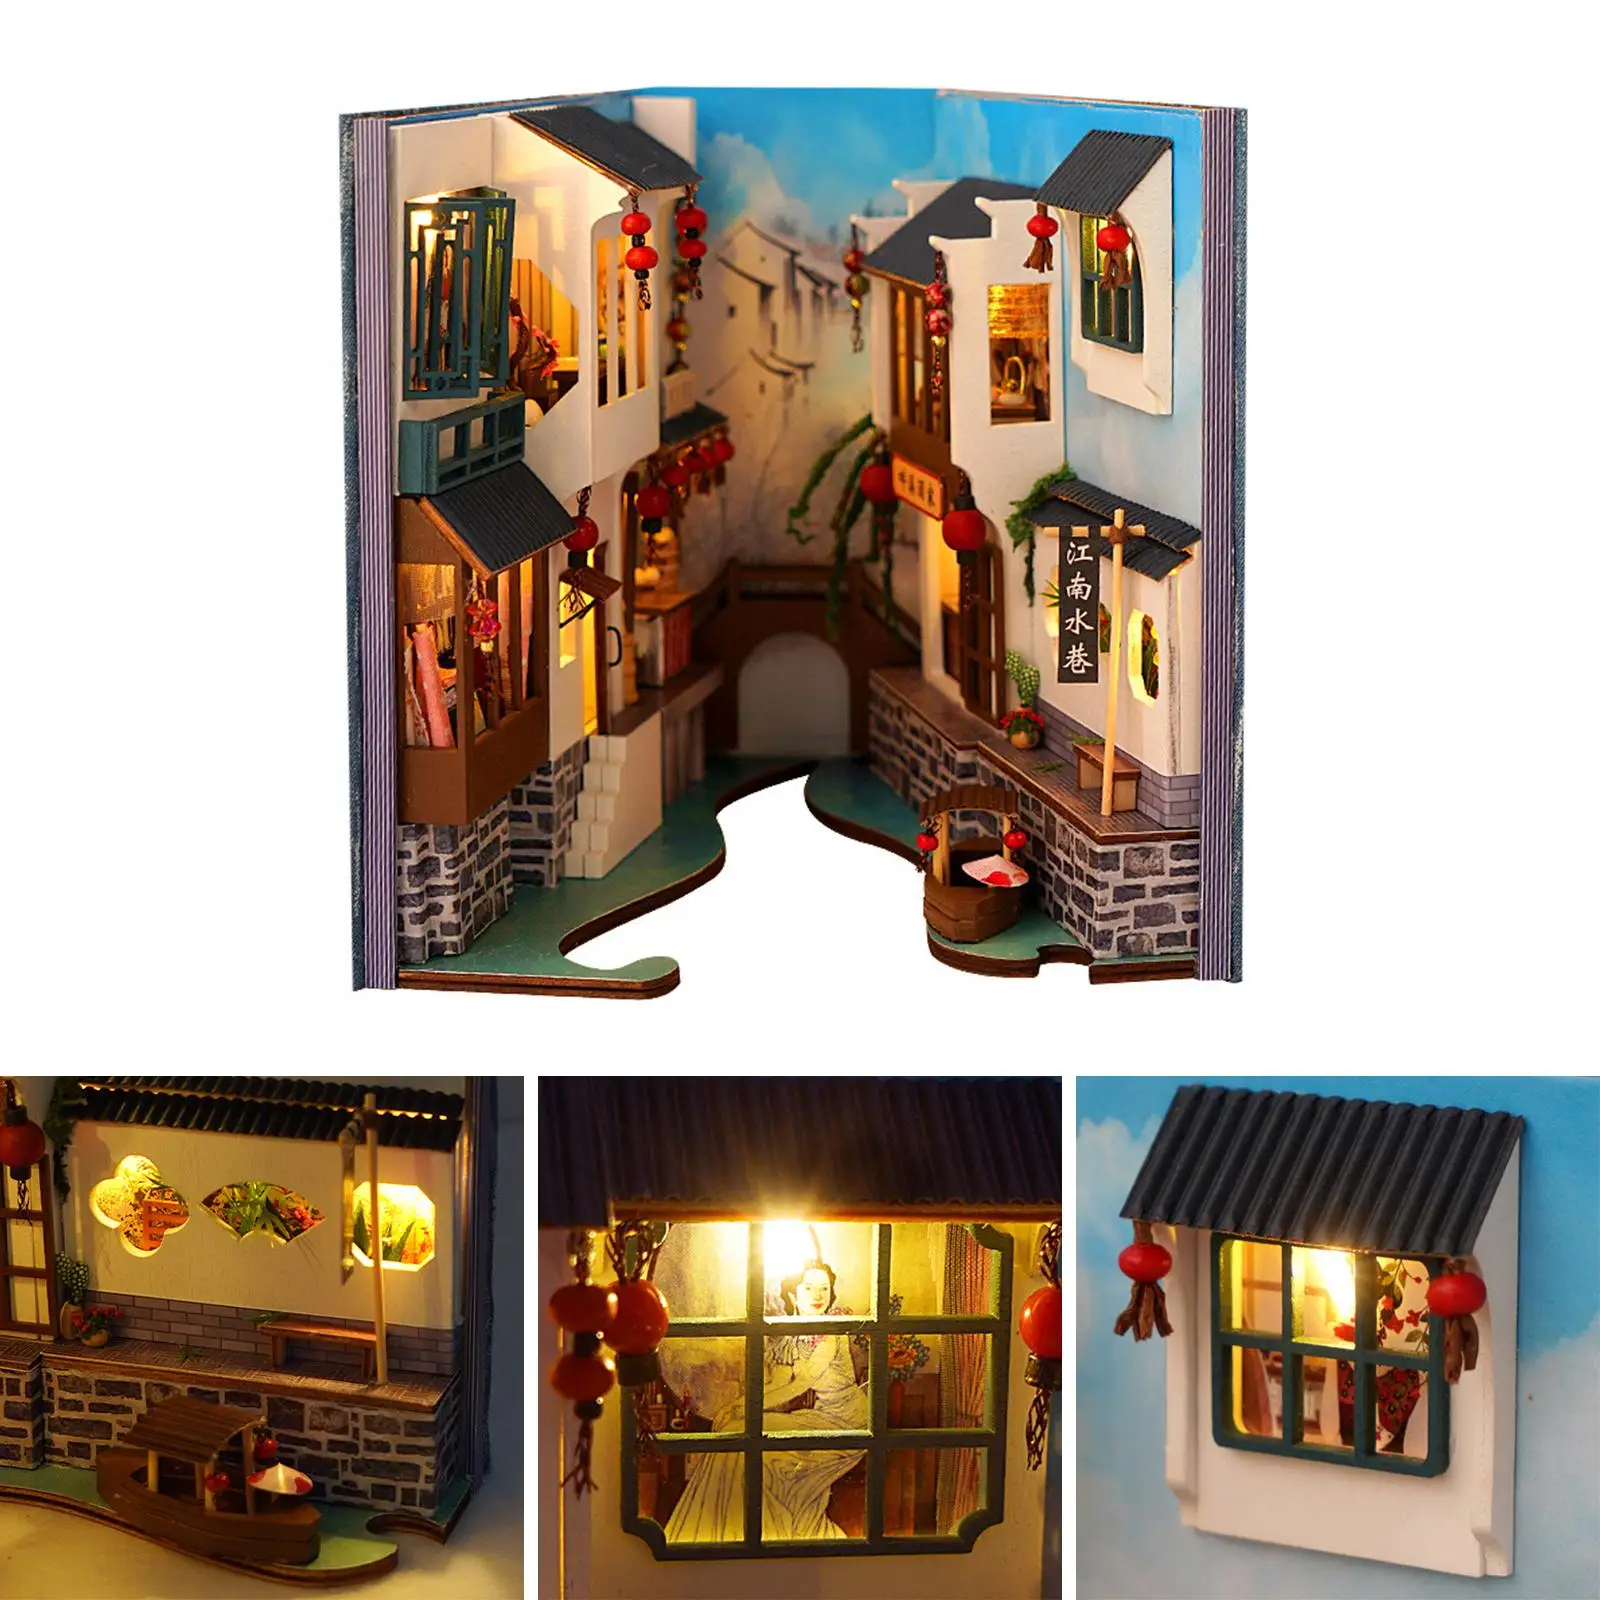 3D LED Light Wooden Miniature Dollhouse Kit for Christmas Gifts